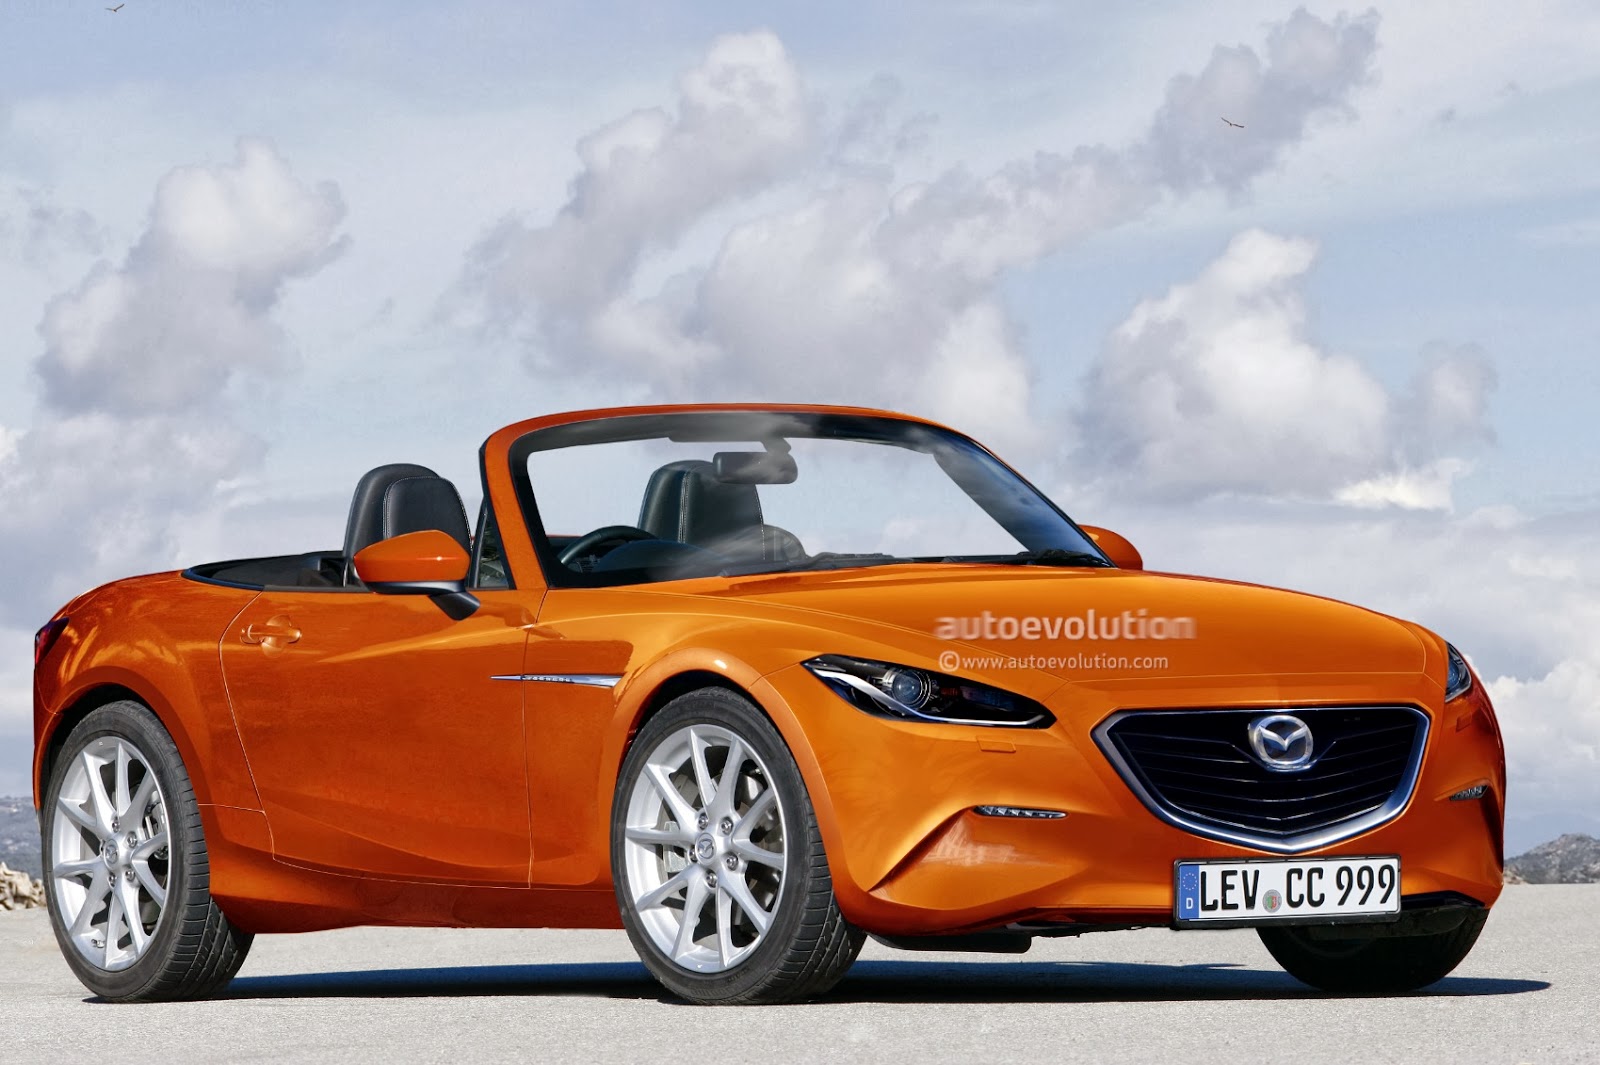 New Car Images: 2014 Mazda